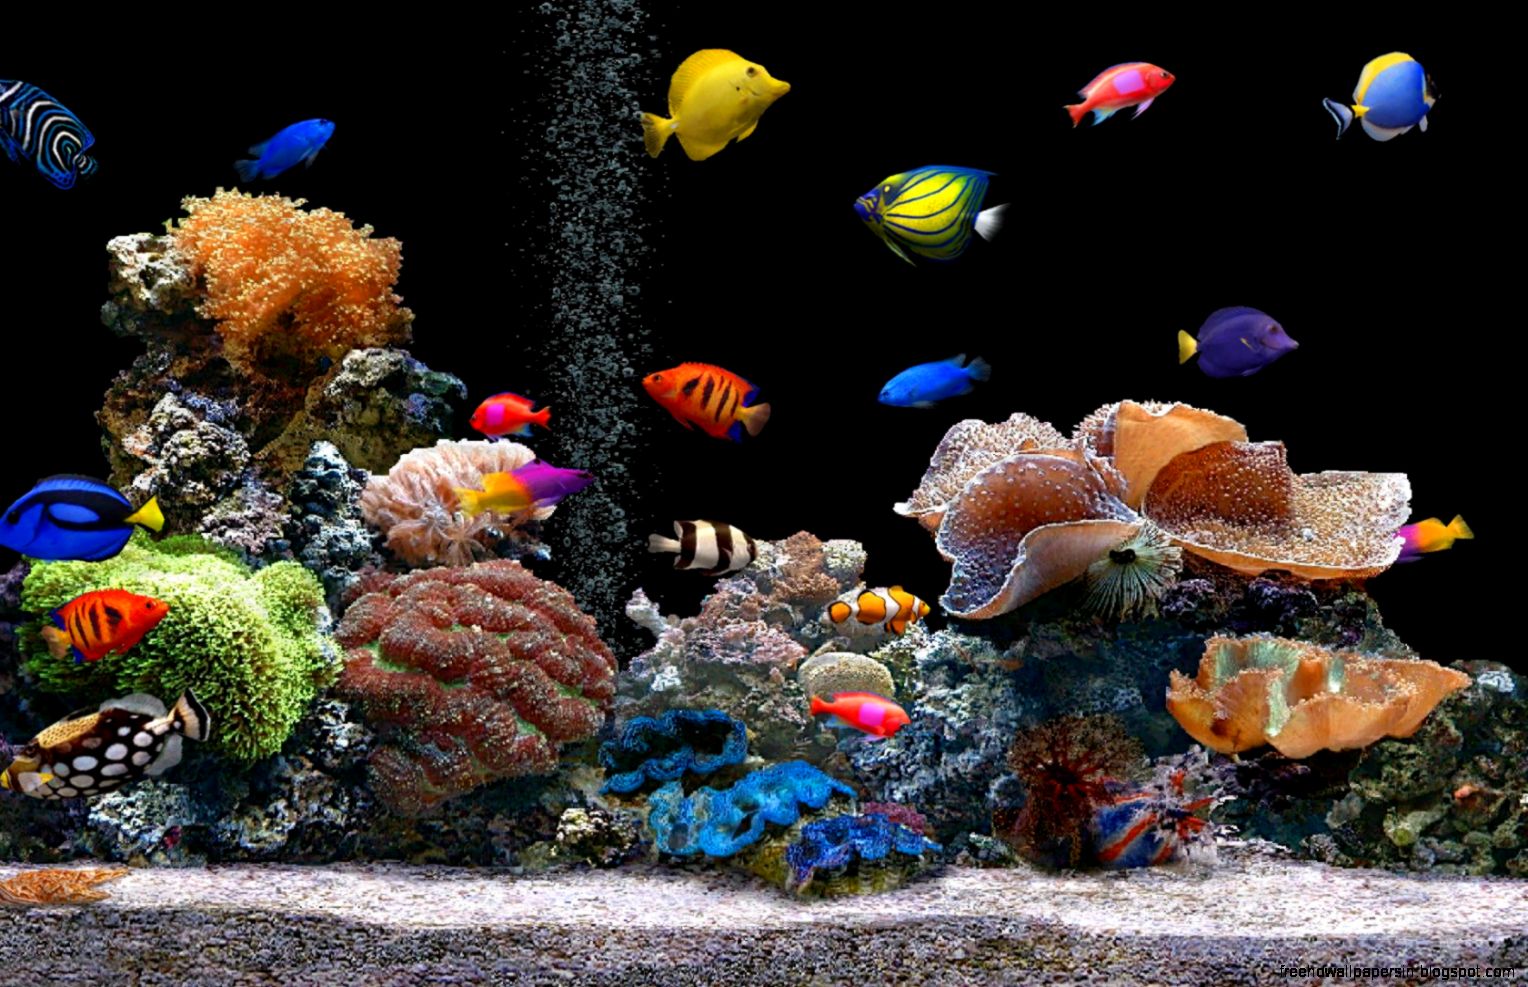 best aquarium screensaver free download